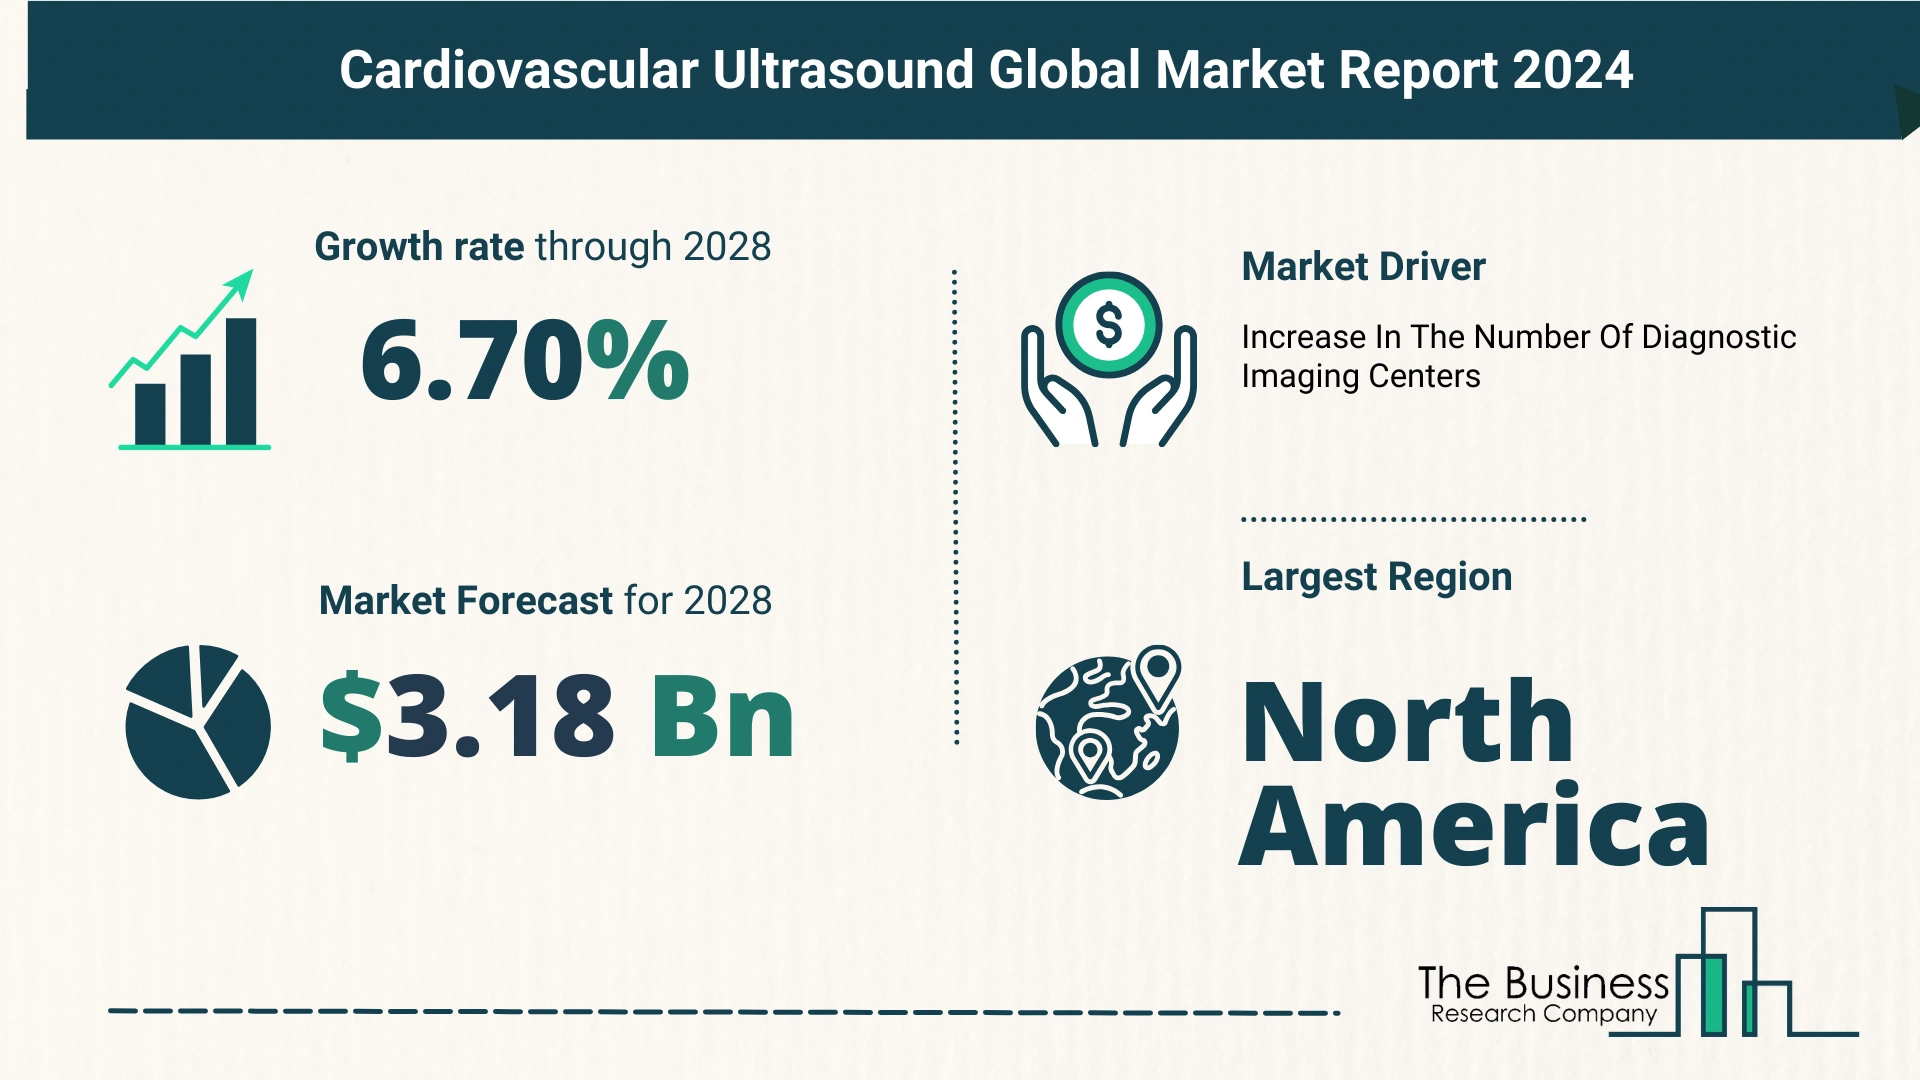 Global Cardiovascular Ultrasound Market Size